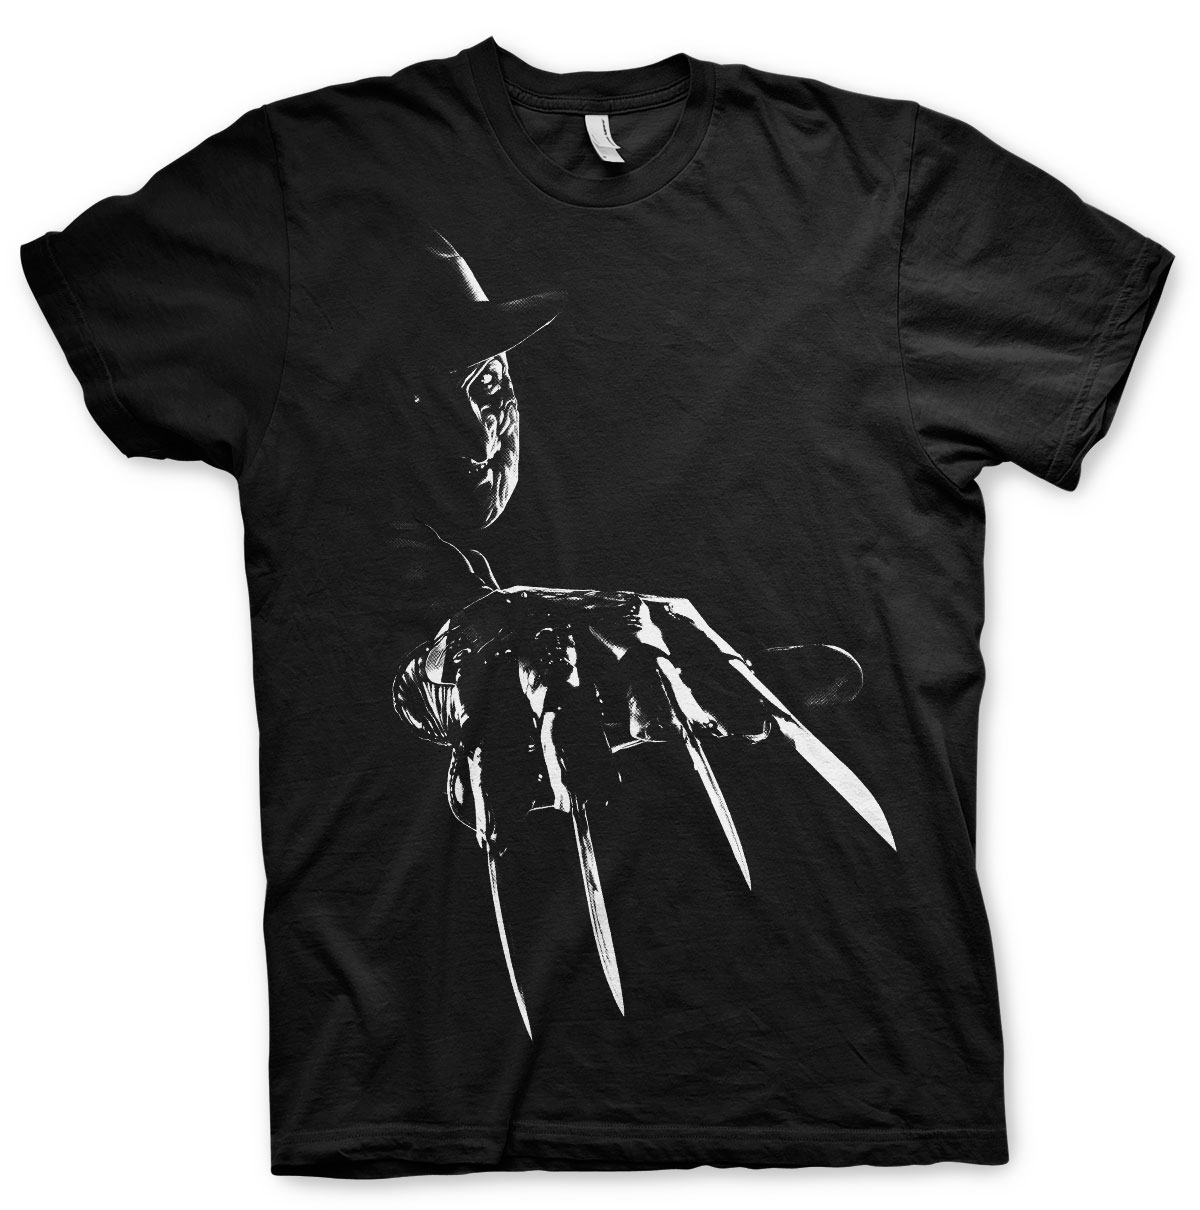 A Nightmare On Elm Street - Freddy Krueger T-Shirt - Shirtstore